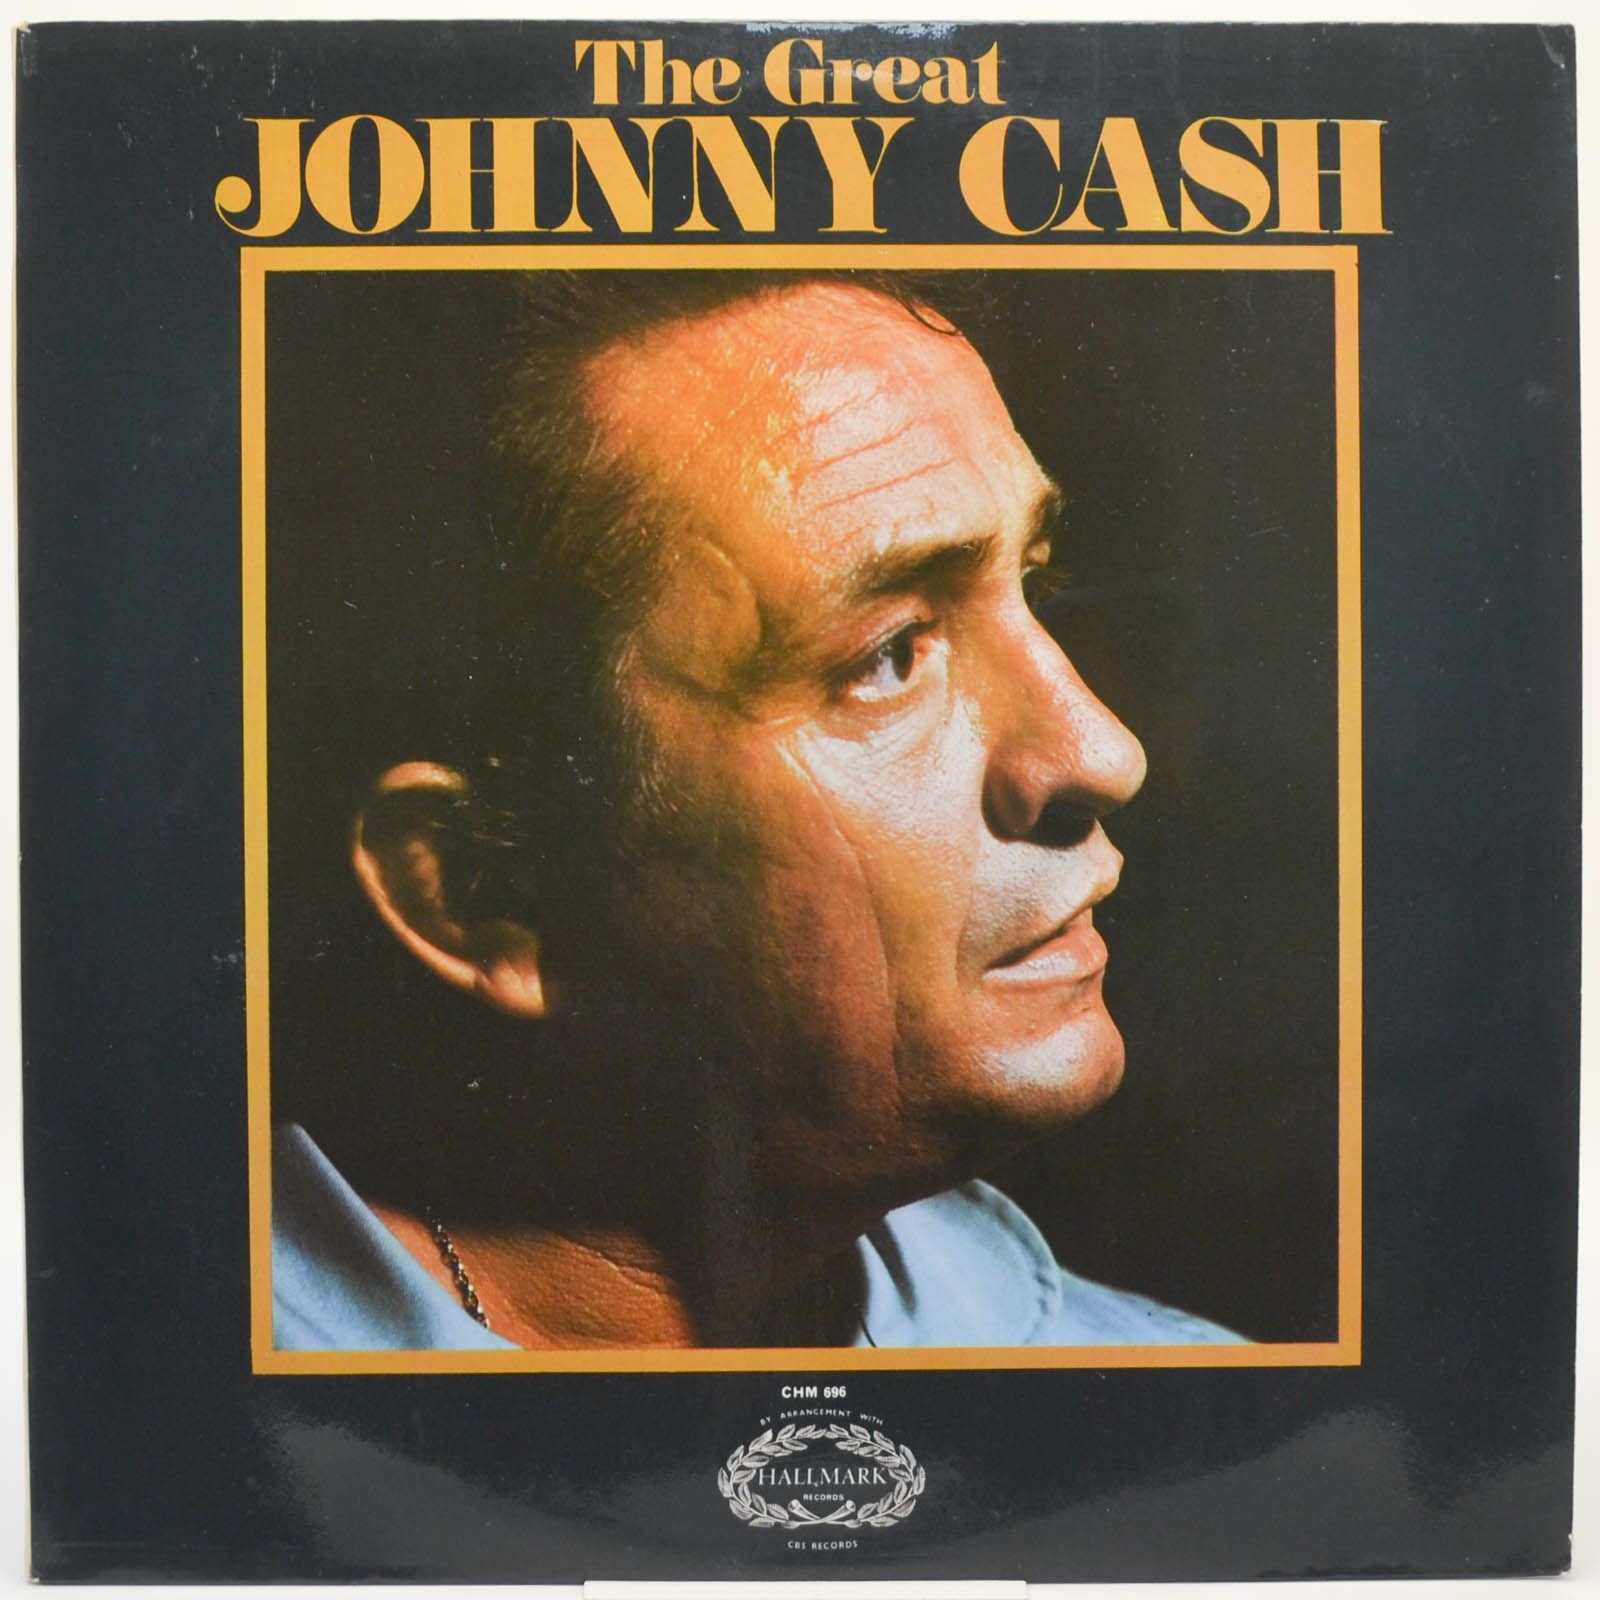 Johnny Cash — The Great Johnny Cash (UK), 1970